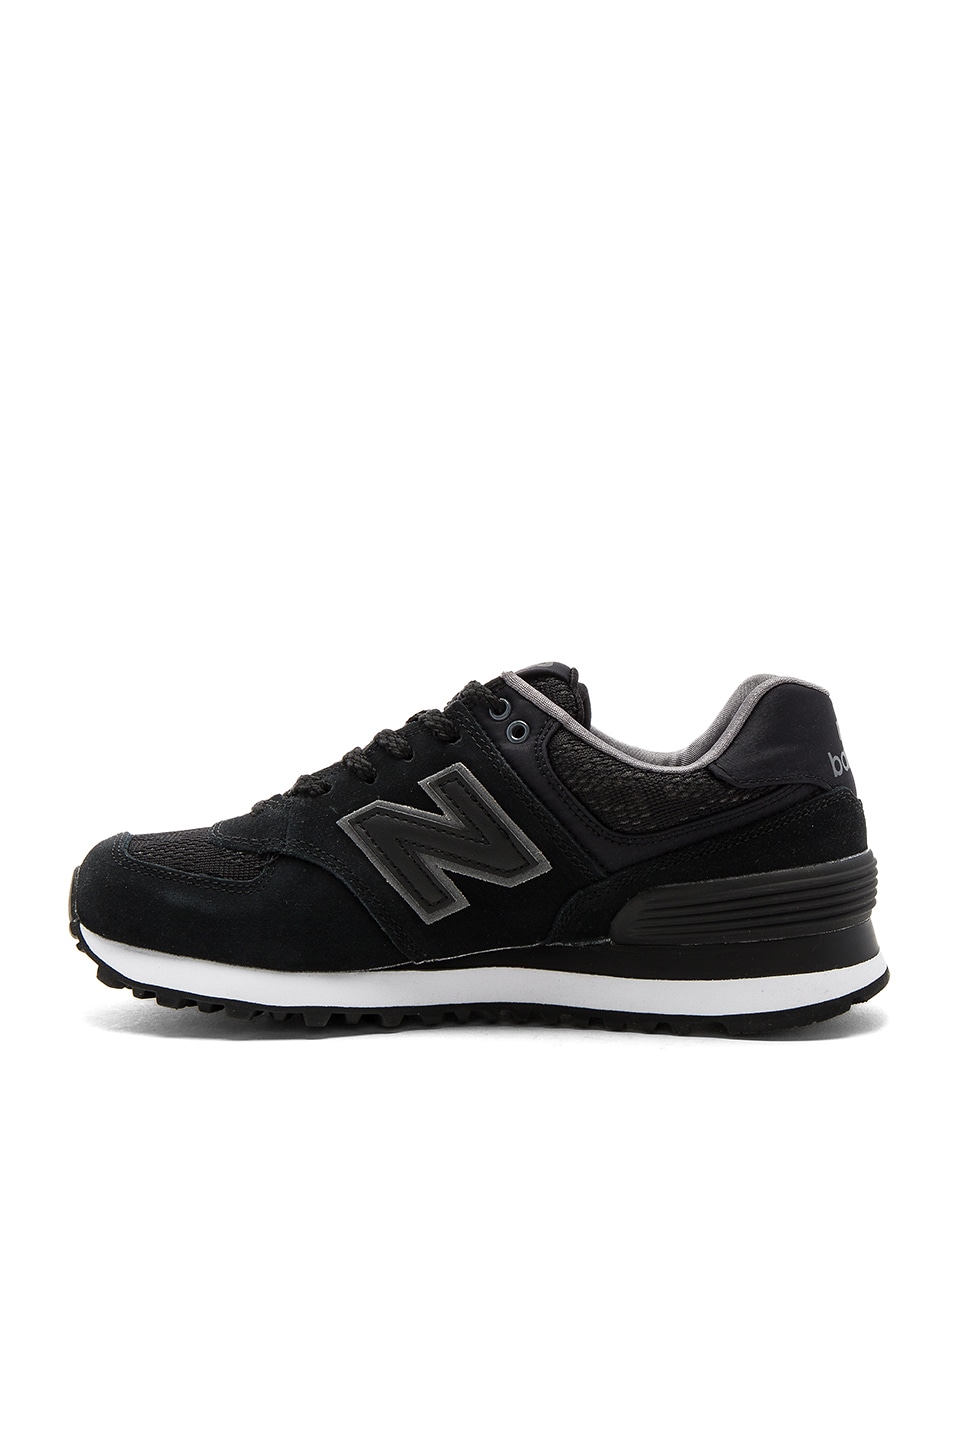 New Balance Nouveau Lace Sneaker in Black & Castlerock | REVOLVE